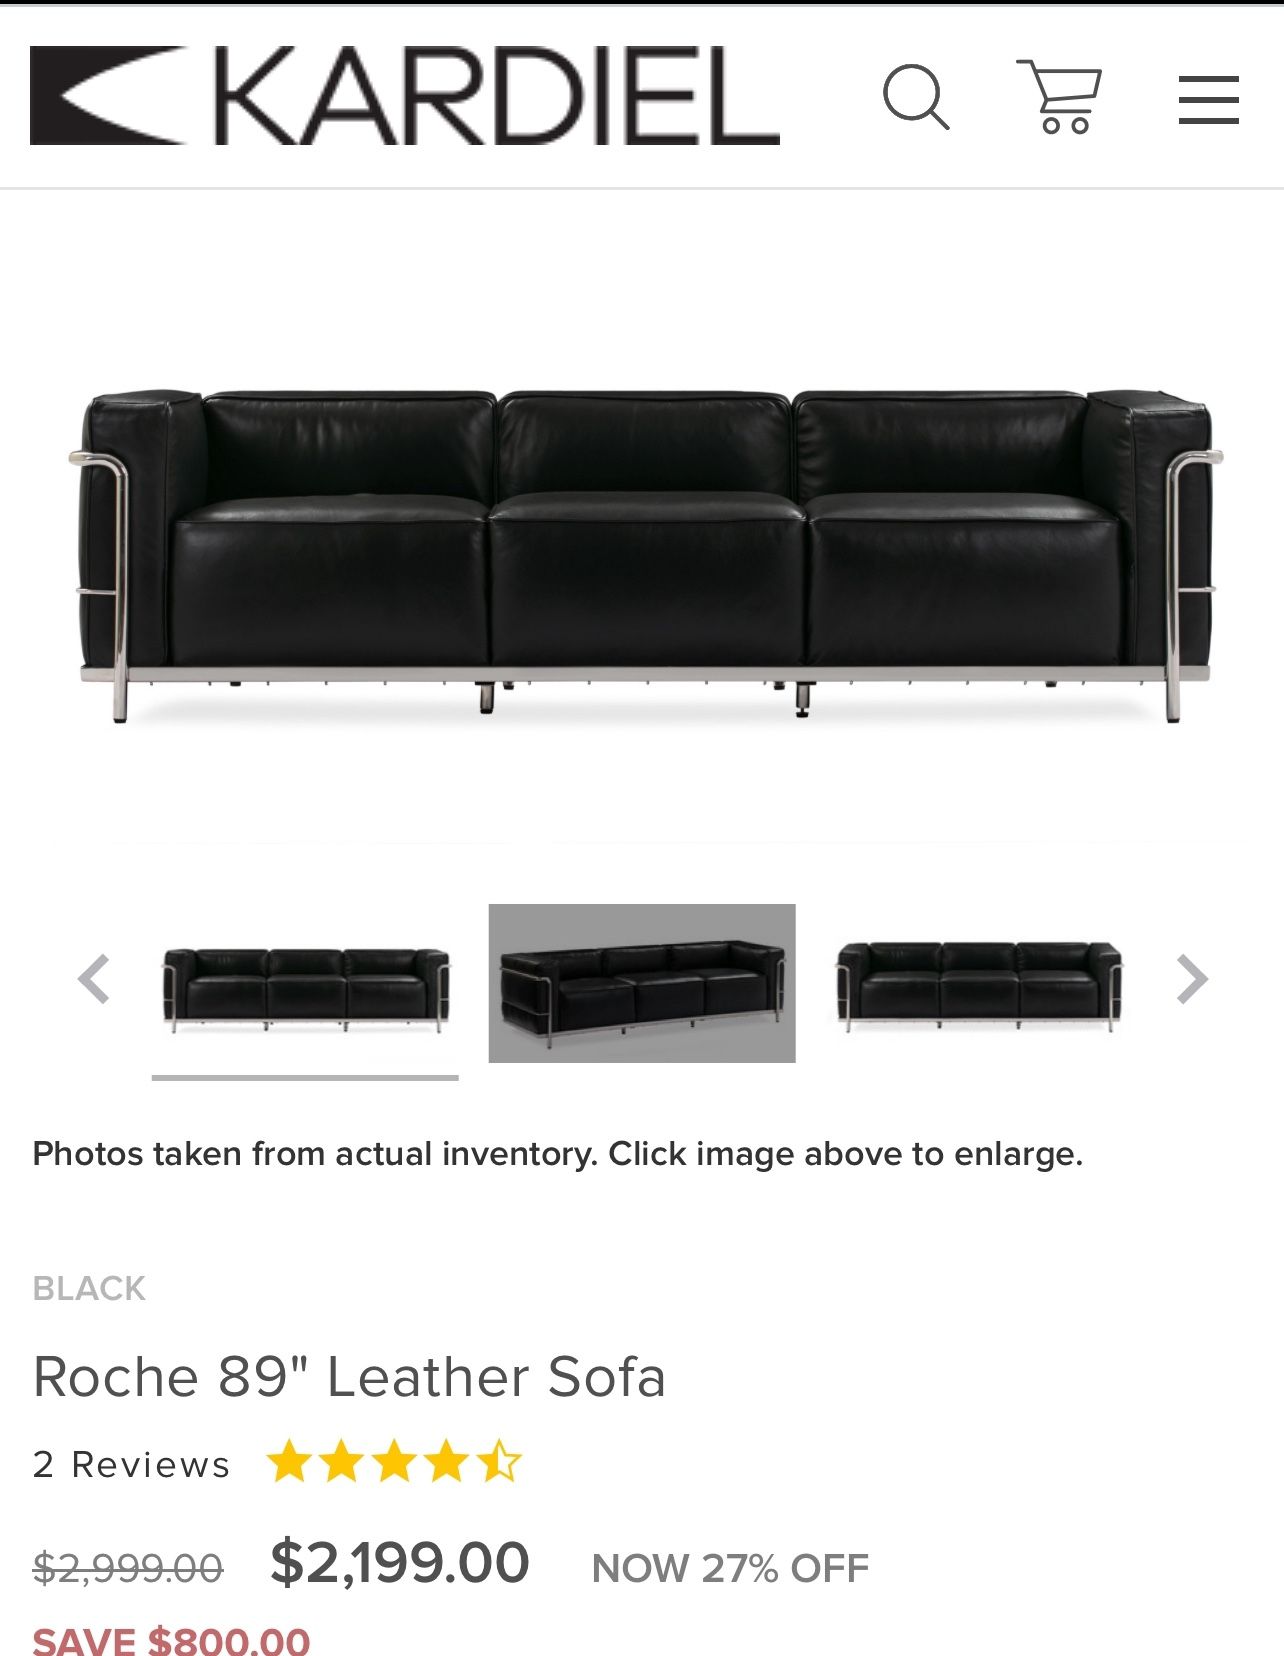 Unique Modern LEATHER Sofa- KARDIEL